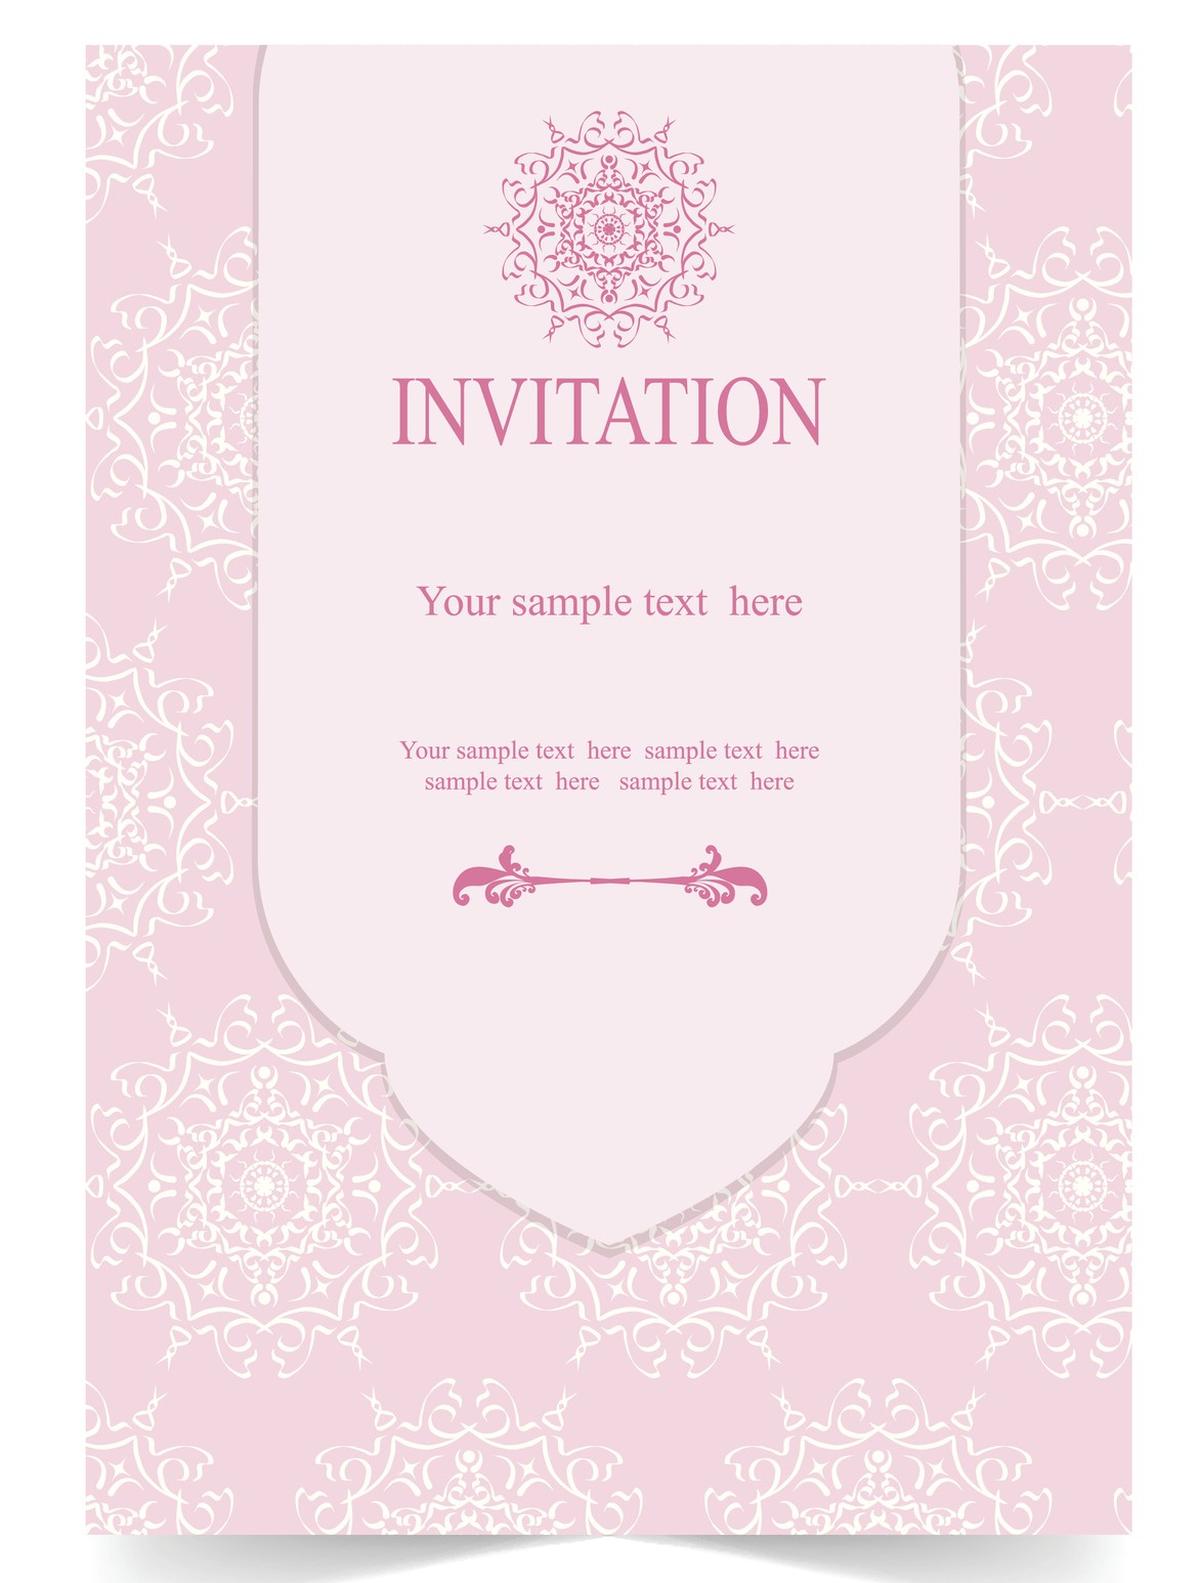 Wedding Card Write Up Sample | free card design ideas